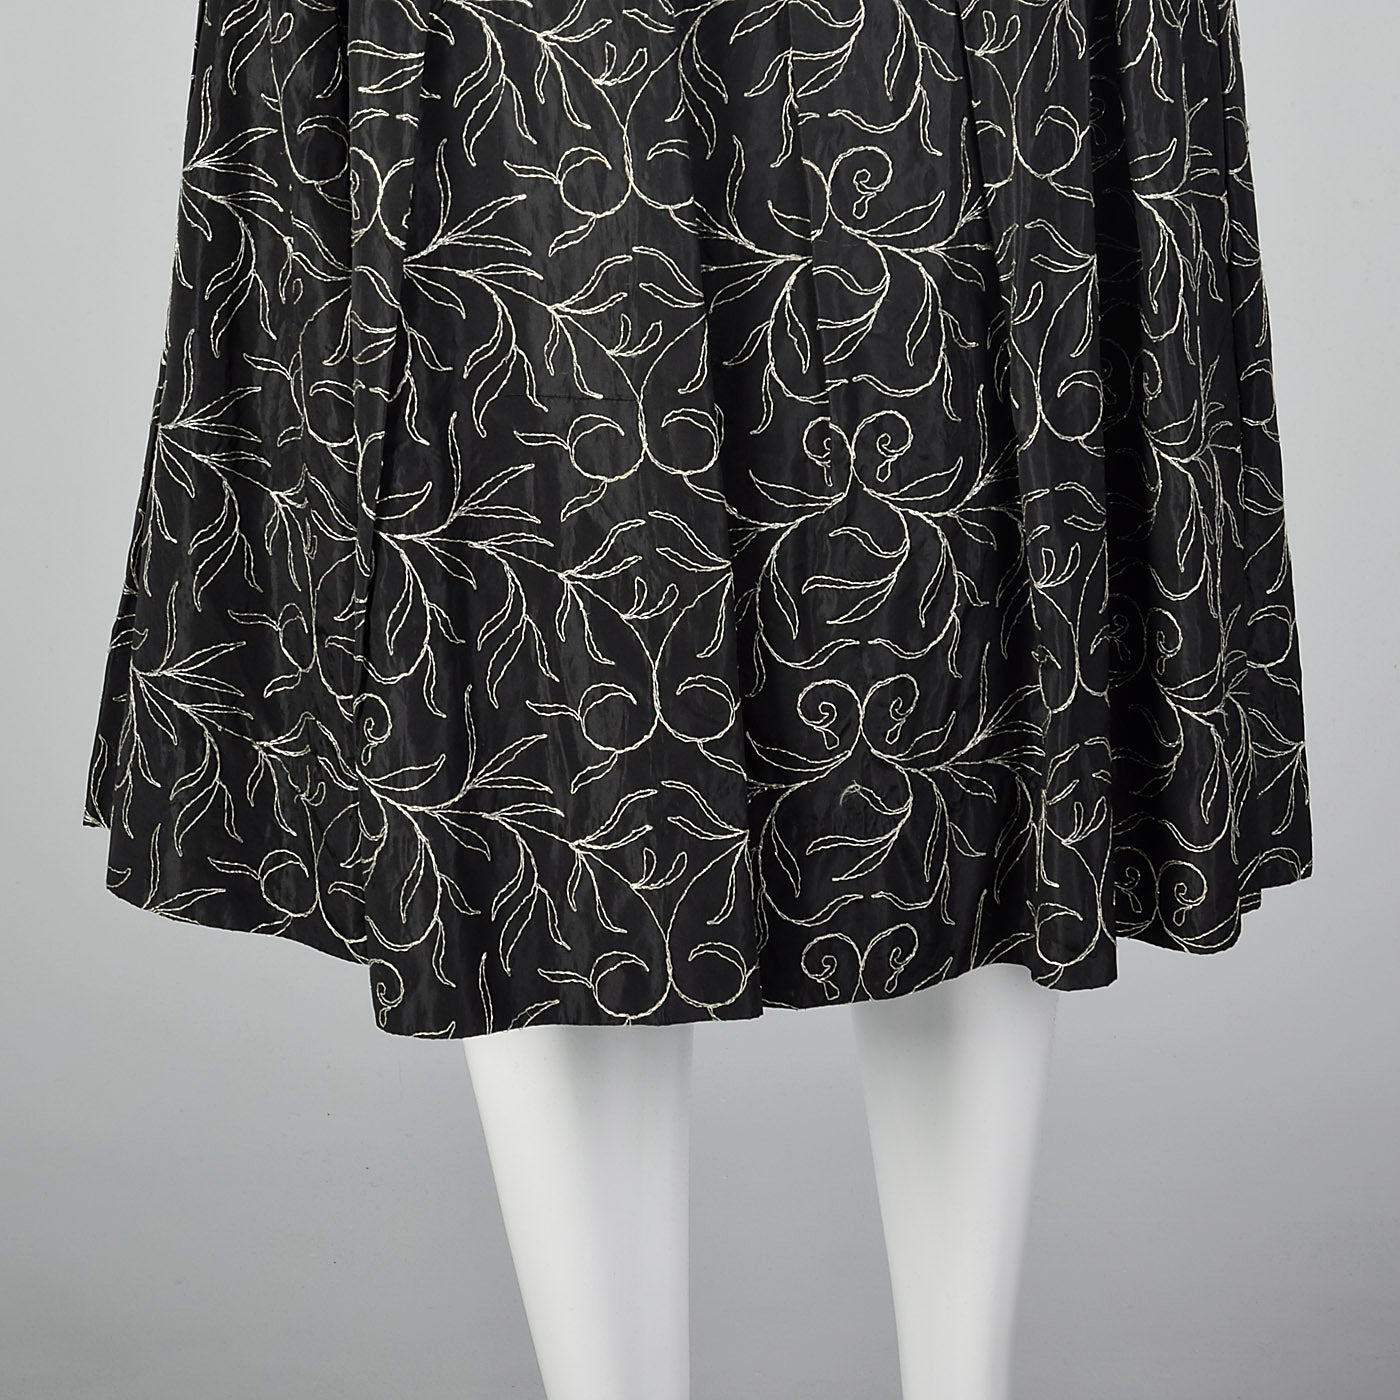 1950s Black Taffeta Skirt with Metallic Silver Embroidery